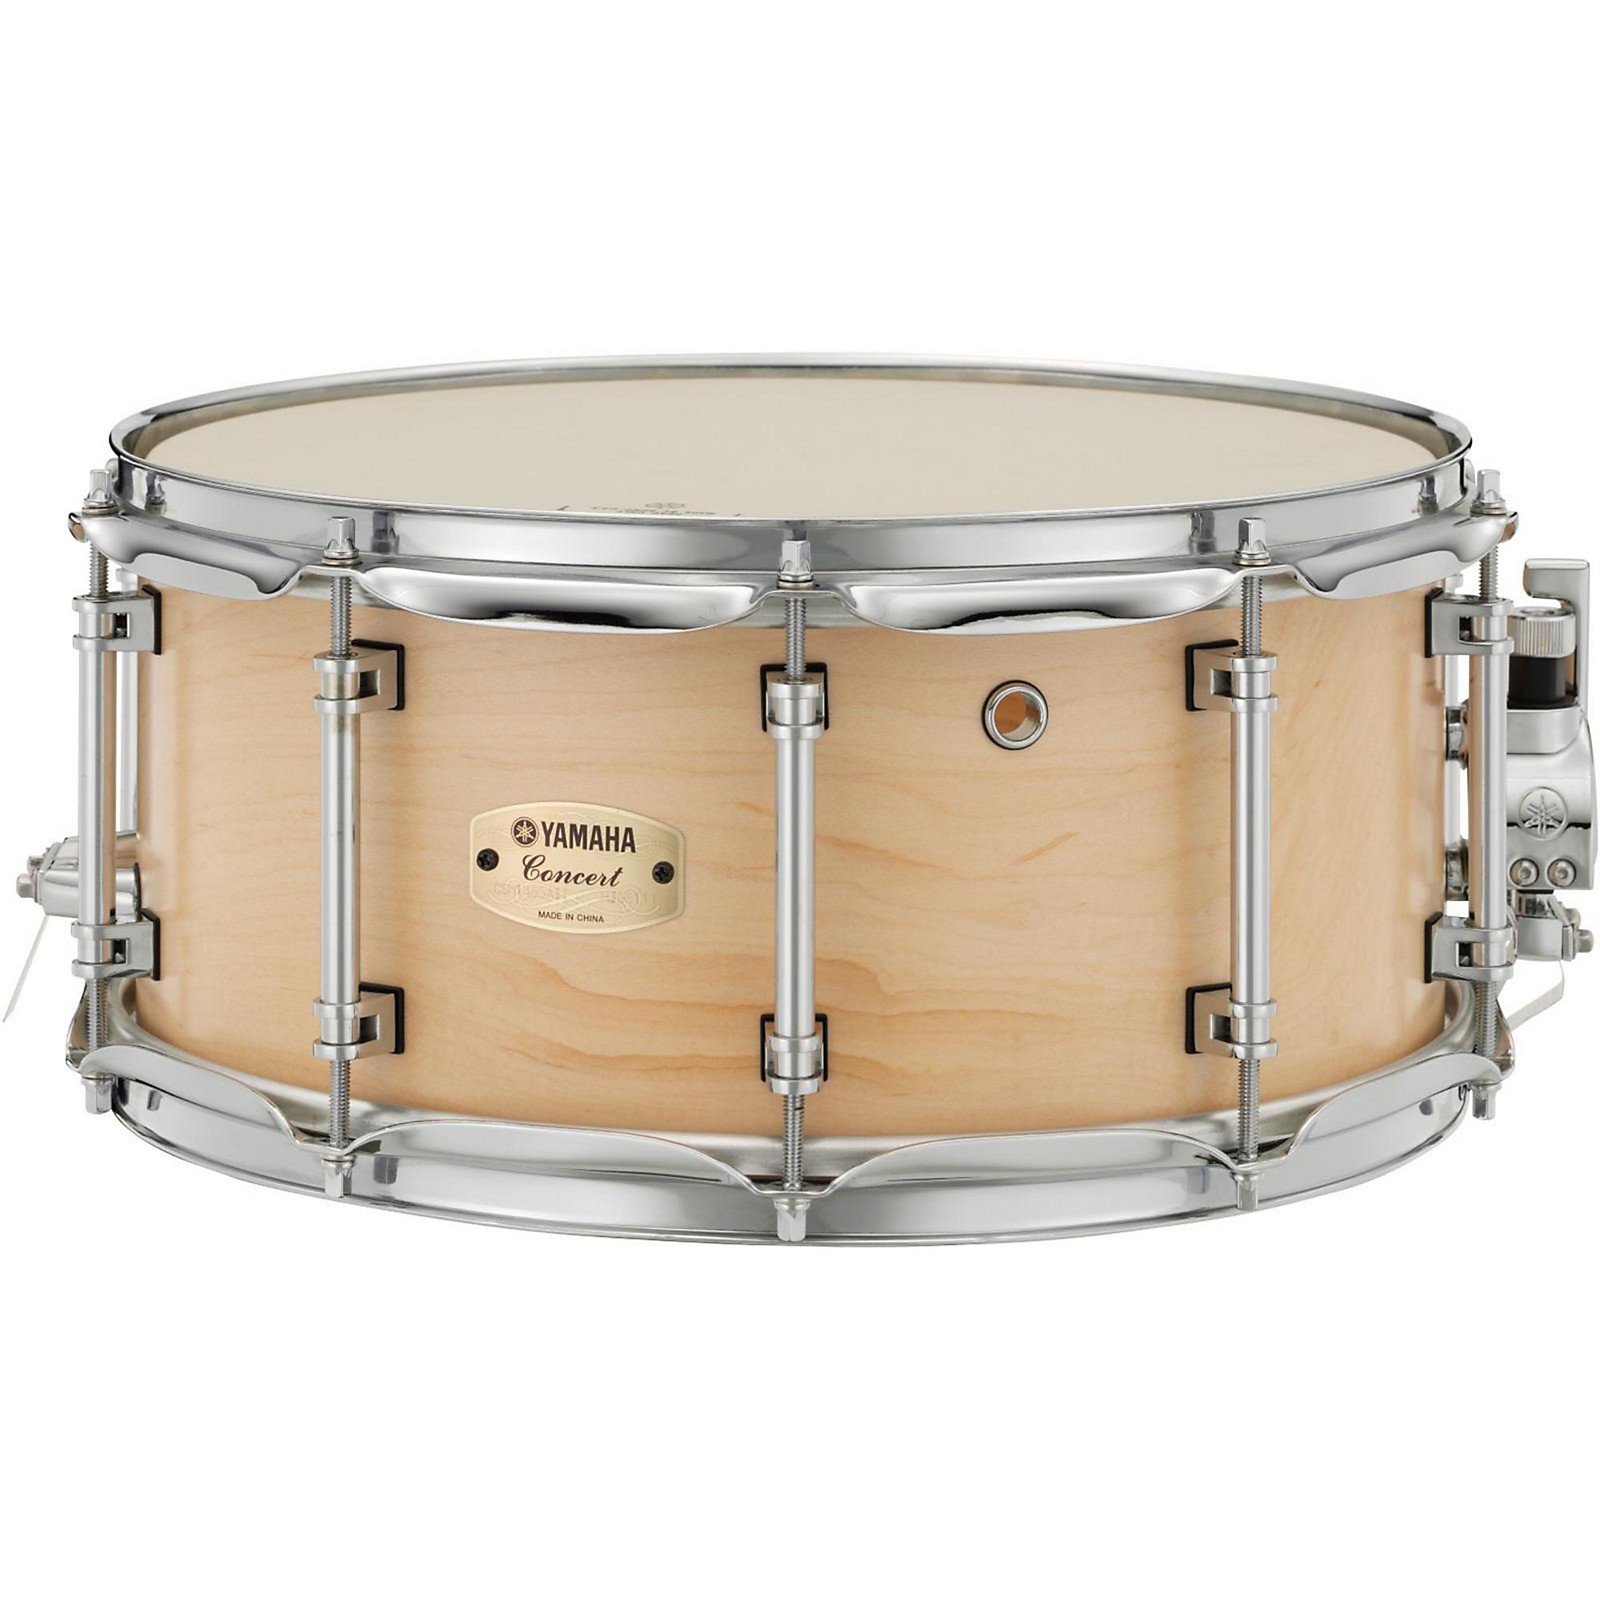 Yamaha Concert Series Maple Snare Drum | Music & Arts